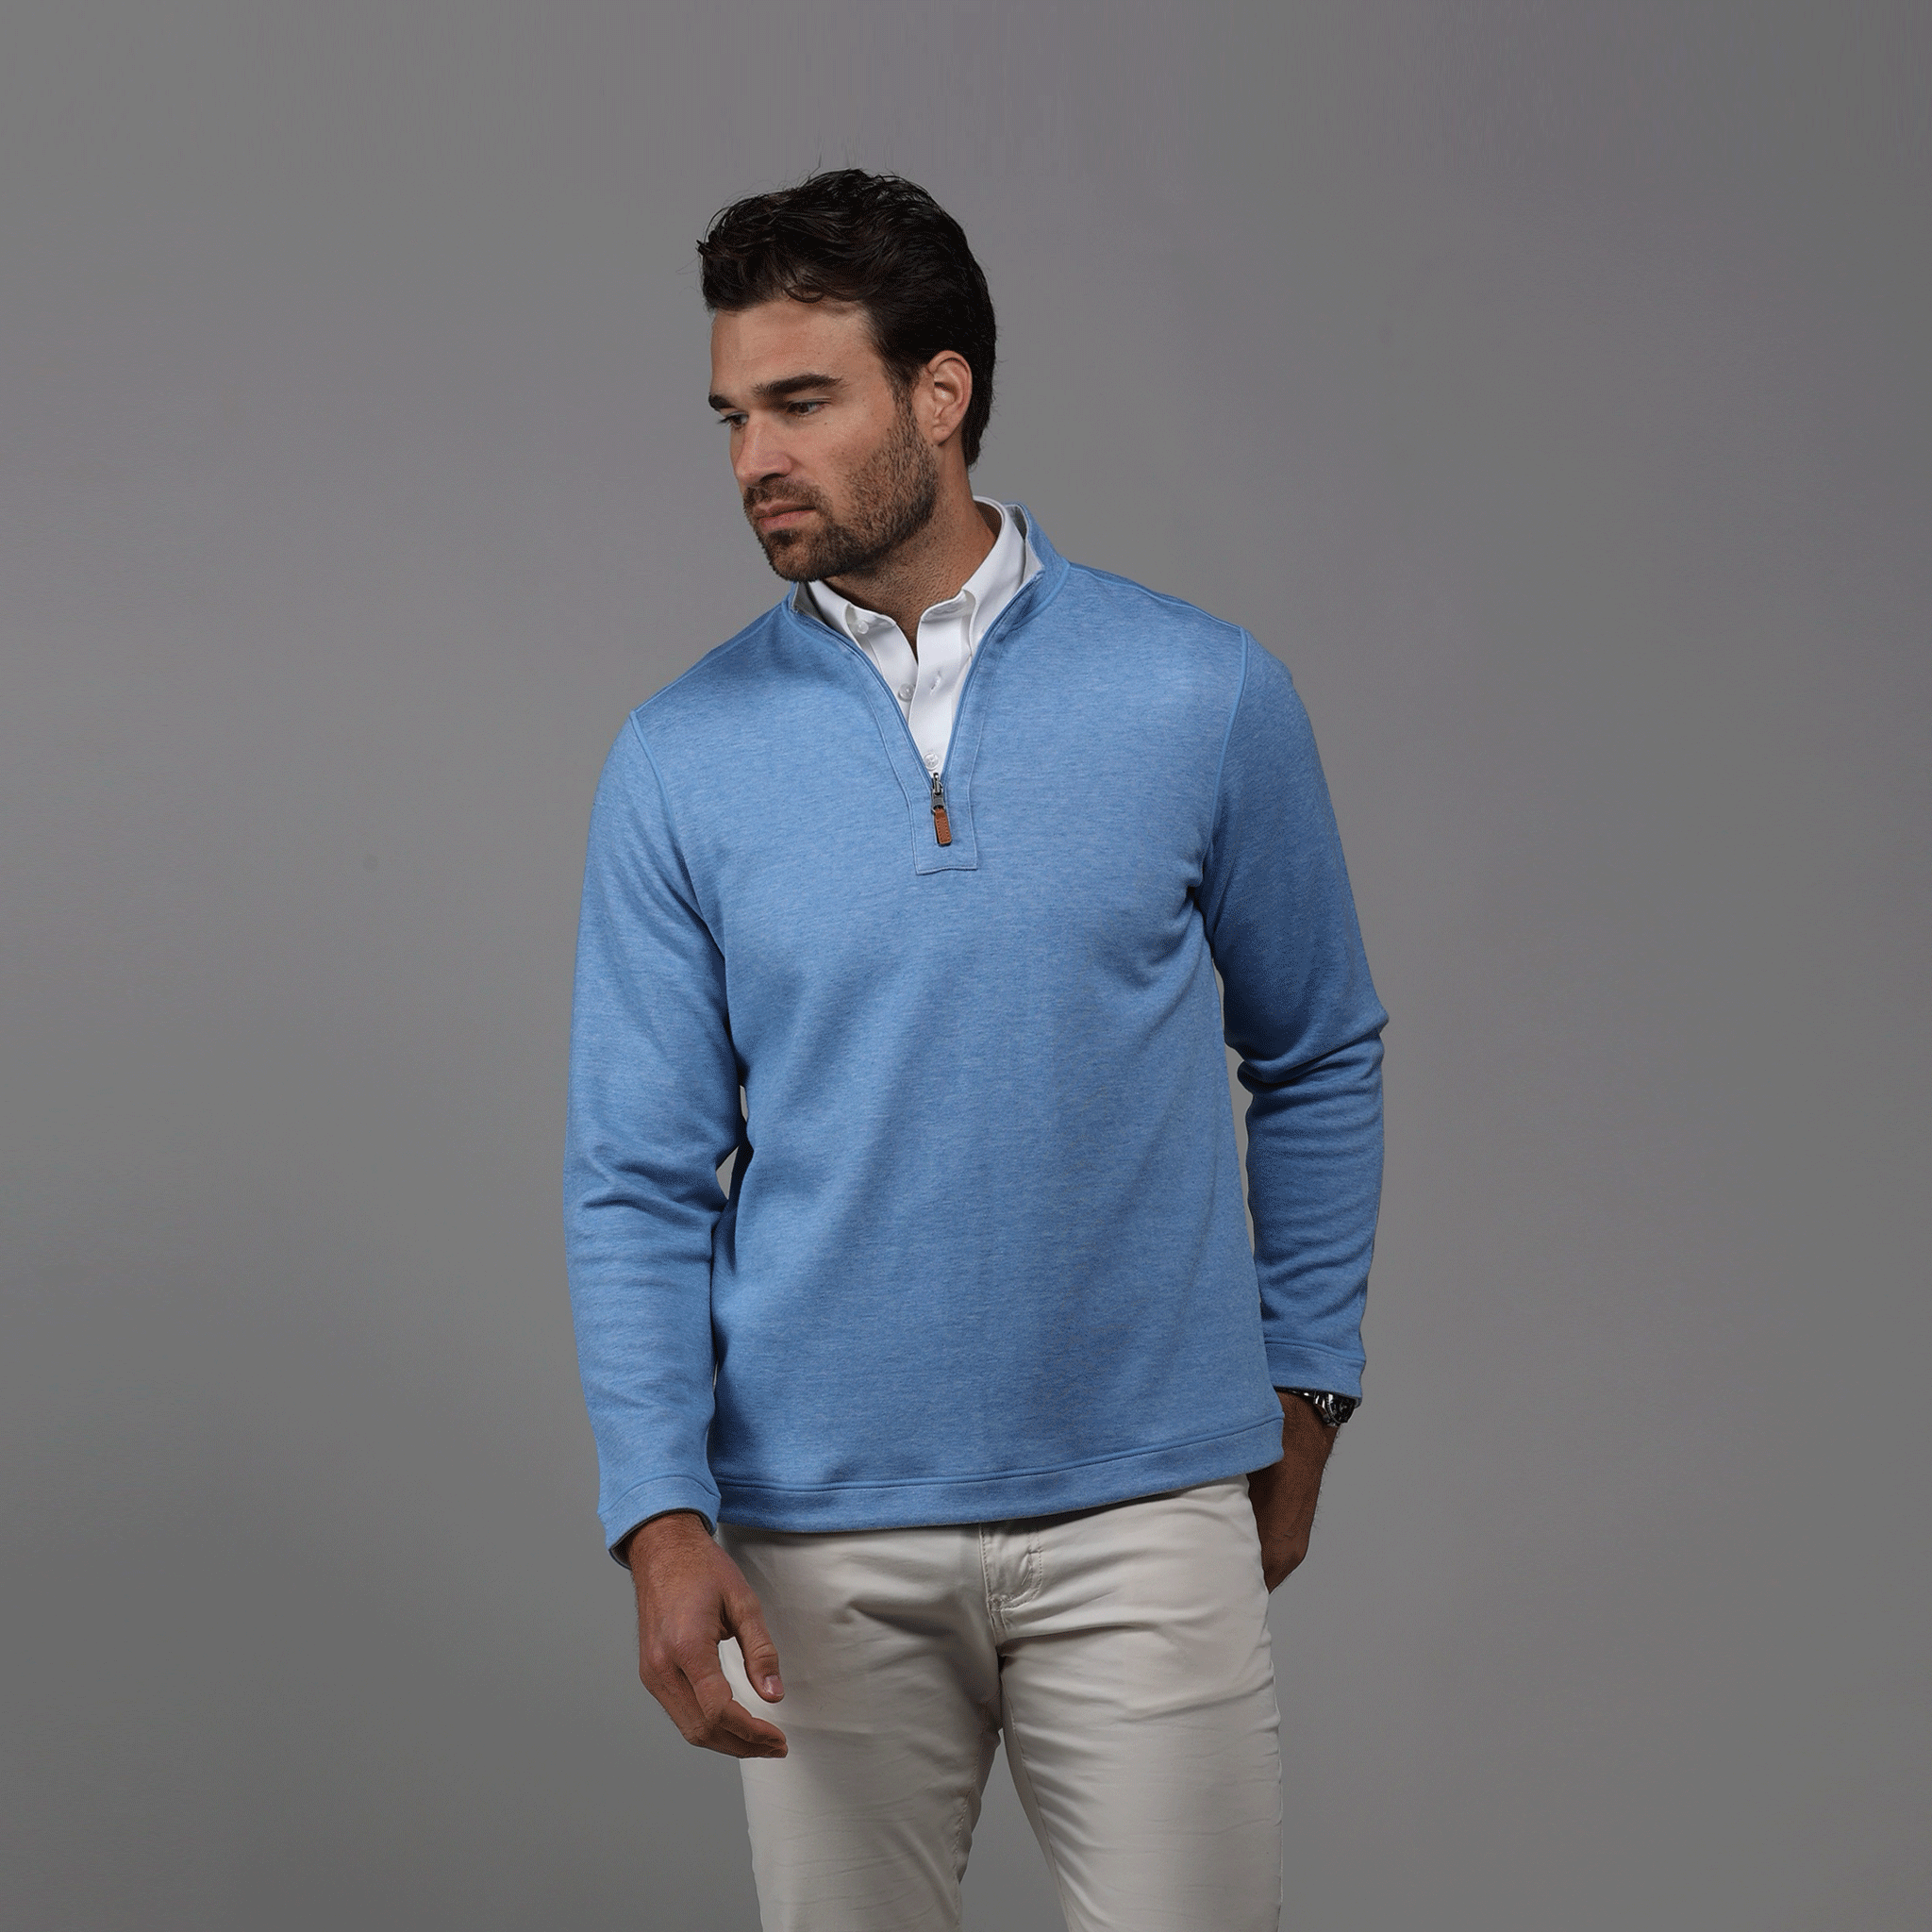 Zip Sky Quarter Zen Cotton Light Blend Reversible – Pullov Blue Collars and & Grey